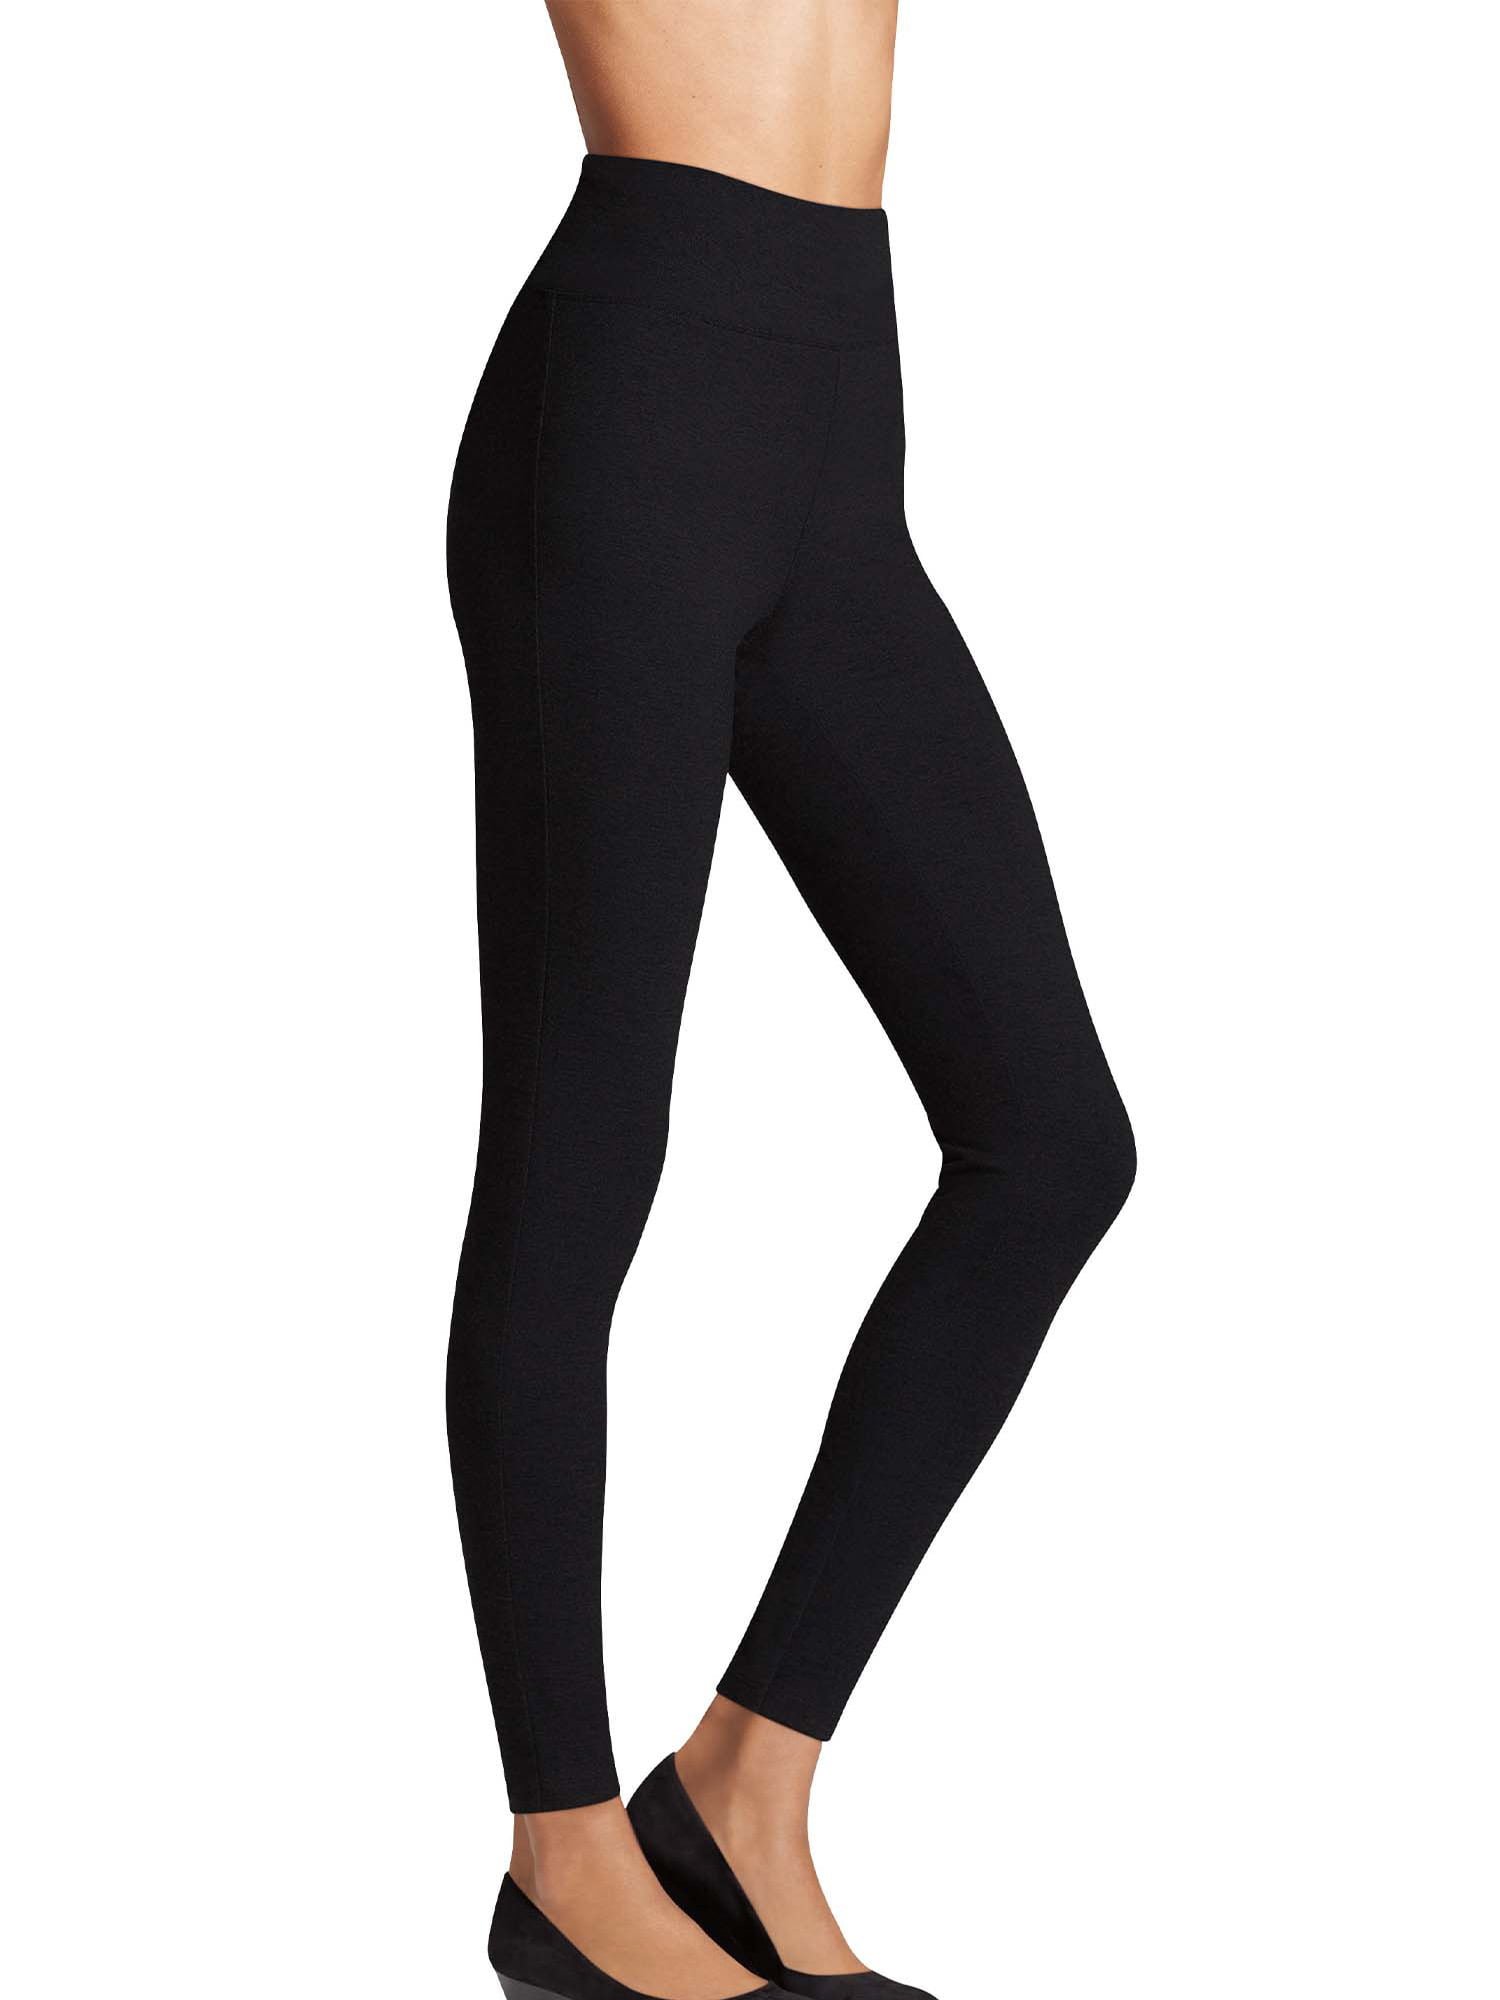 Medium 1 Pair Black Hanes Women’s Stretch Cotton/Spandex Leggings Brand New